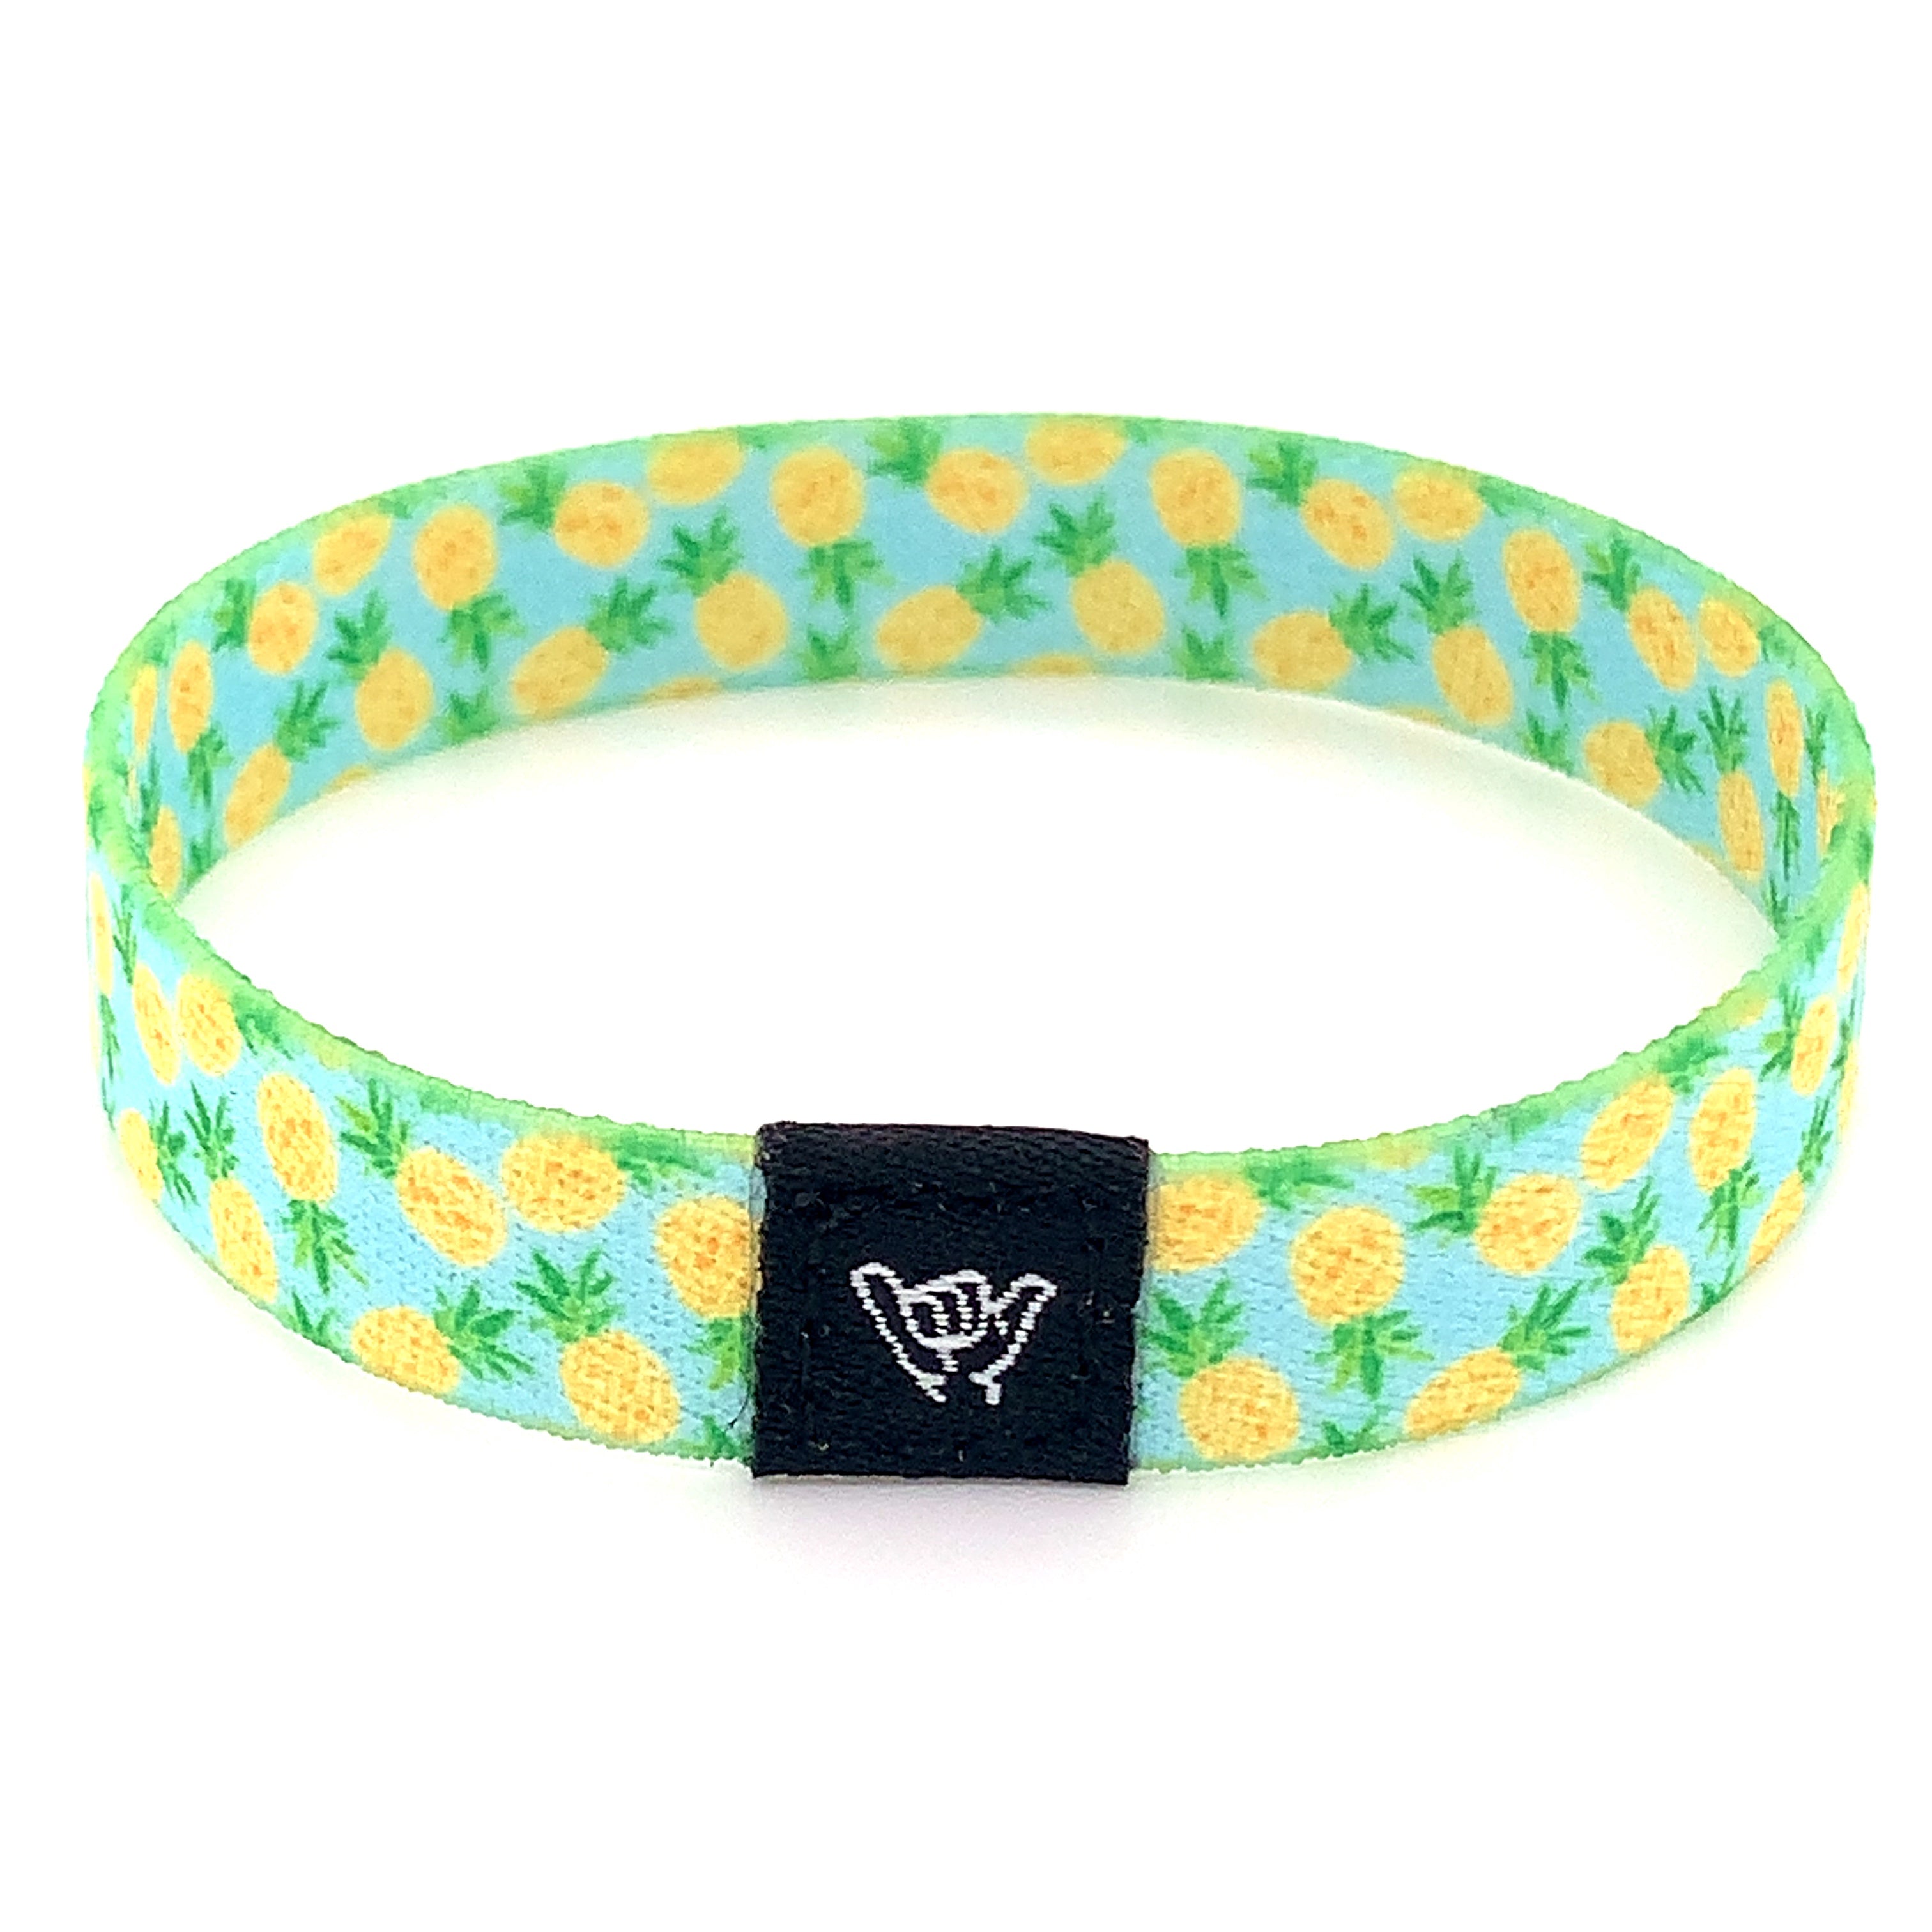 Pineapple beach friendship bracelets